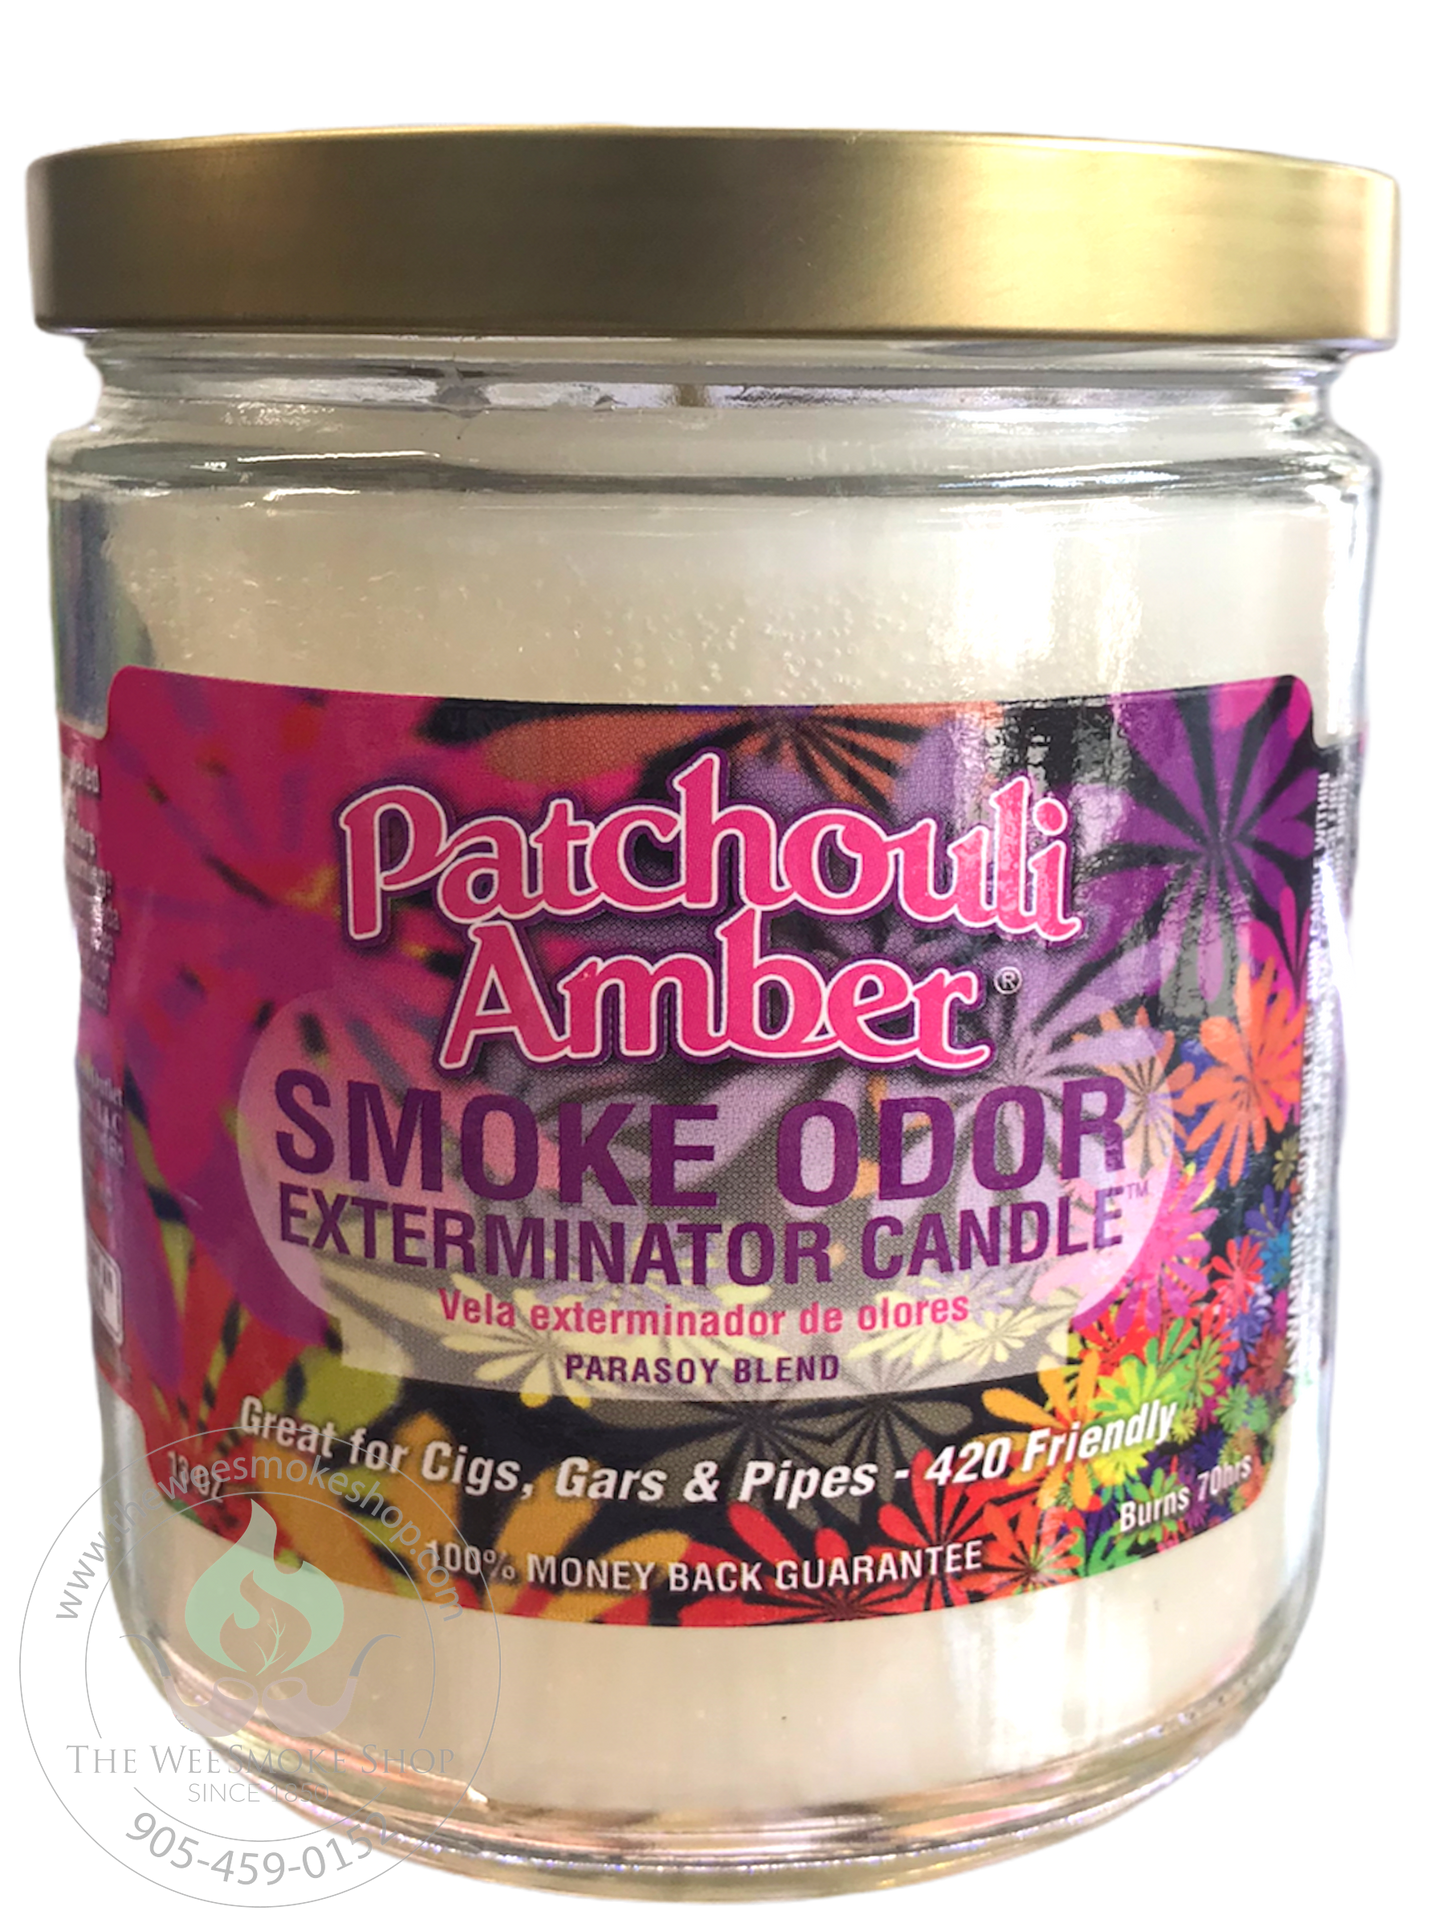 Patchouli Amber Smoke Odor Exterminator Candle - Wee Smoke Shop